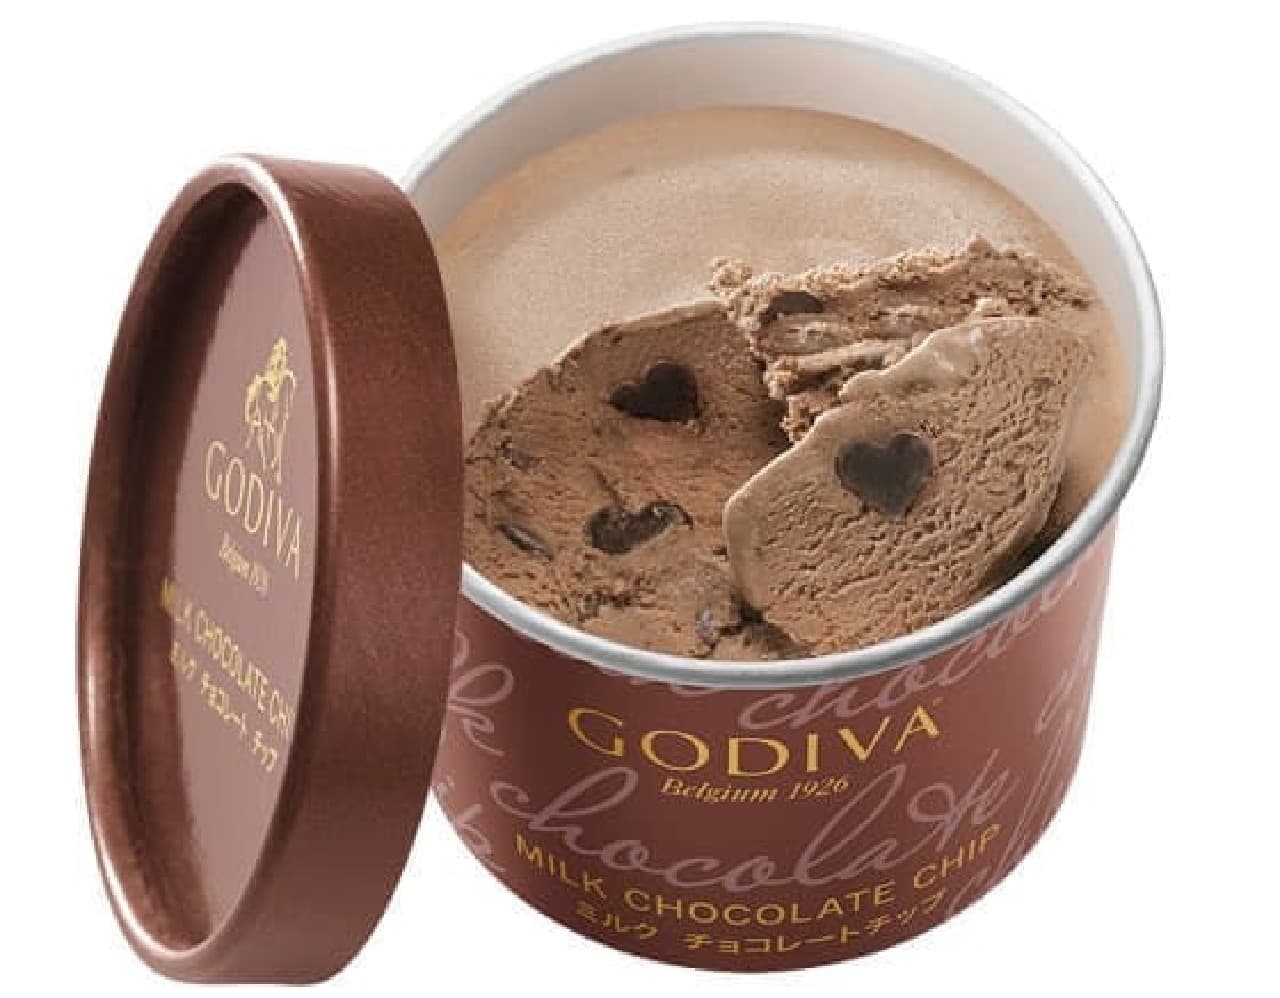 Godiva Cup Ice "Milk Chocolate Chip"